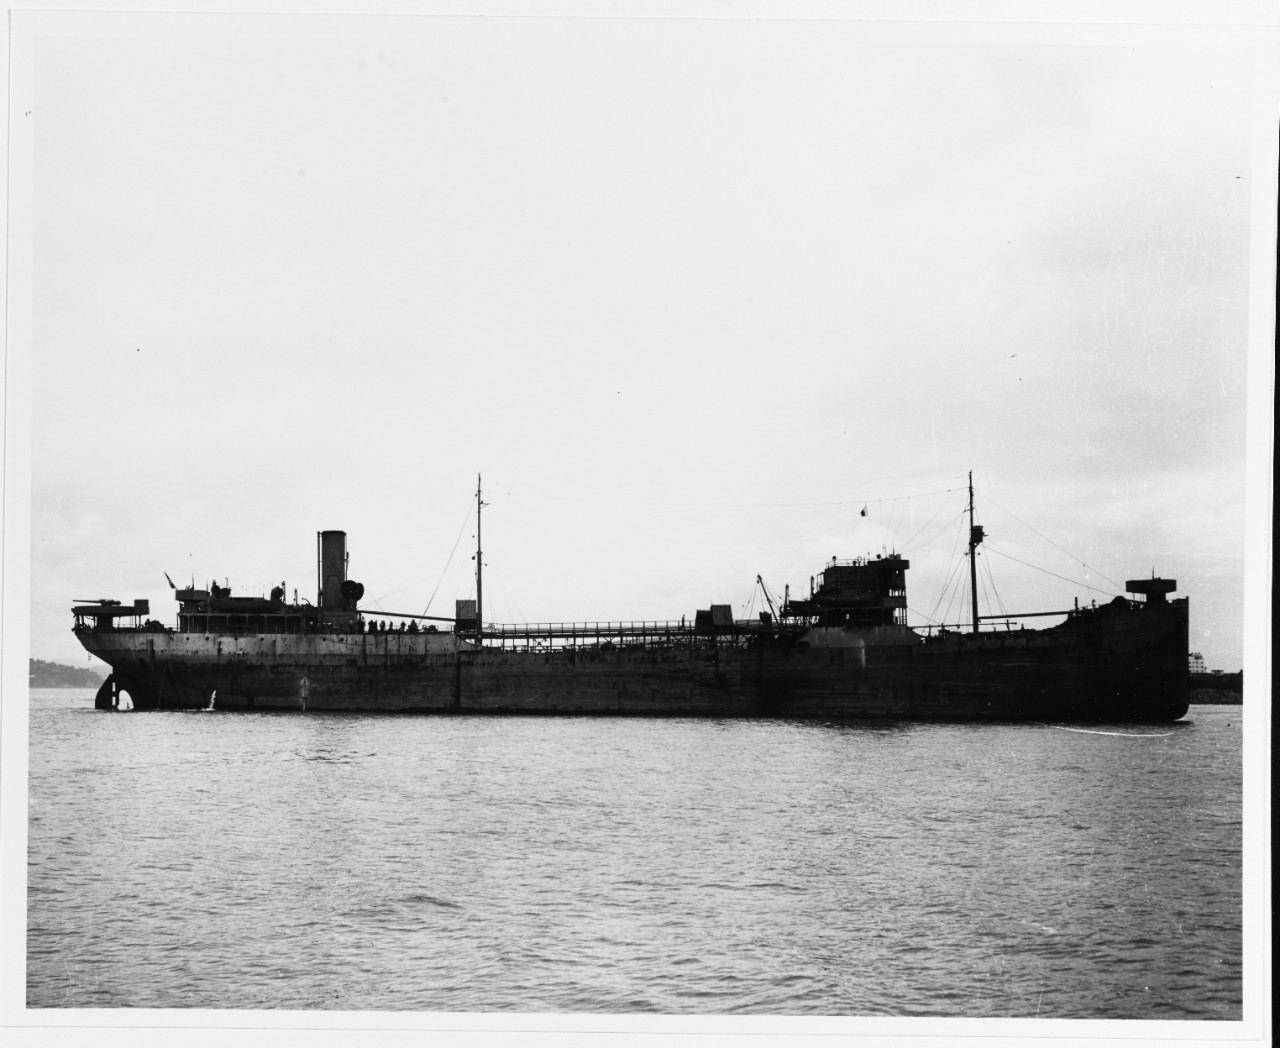 S.S. PAUL SHOUP (U.S. Merchant Tanker, 1921-1954)